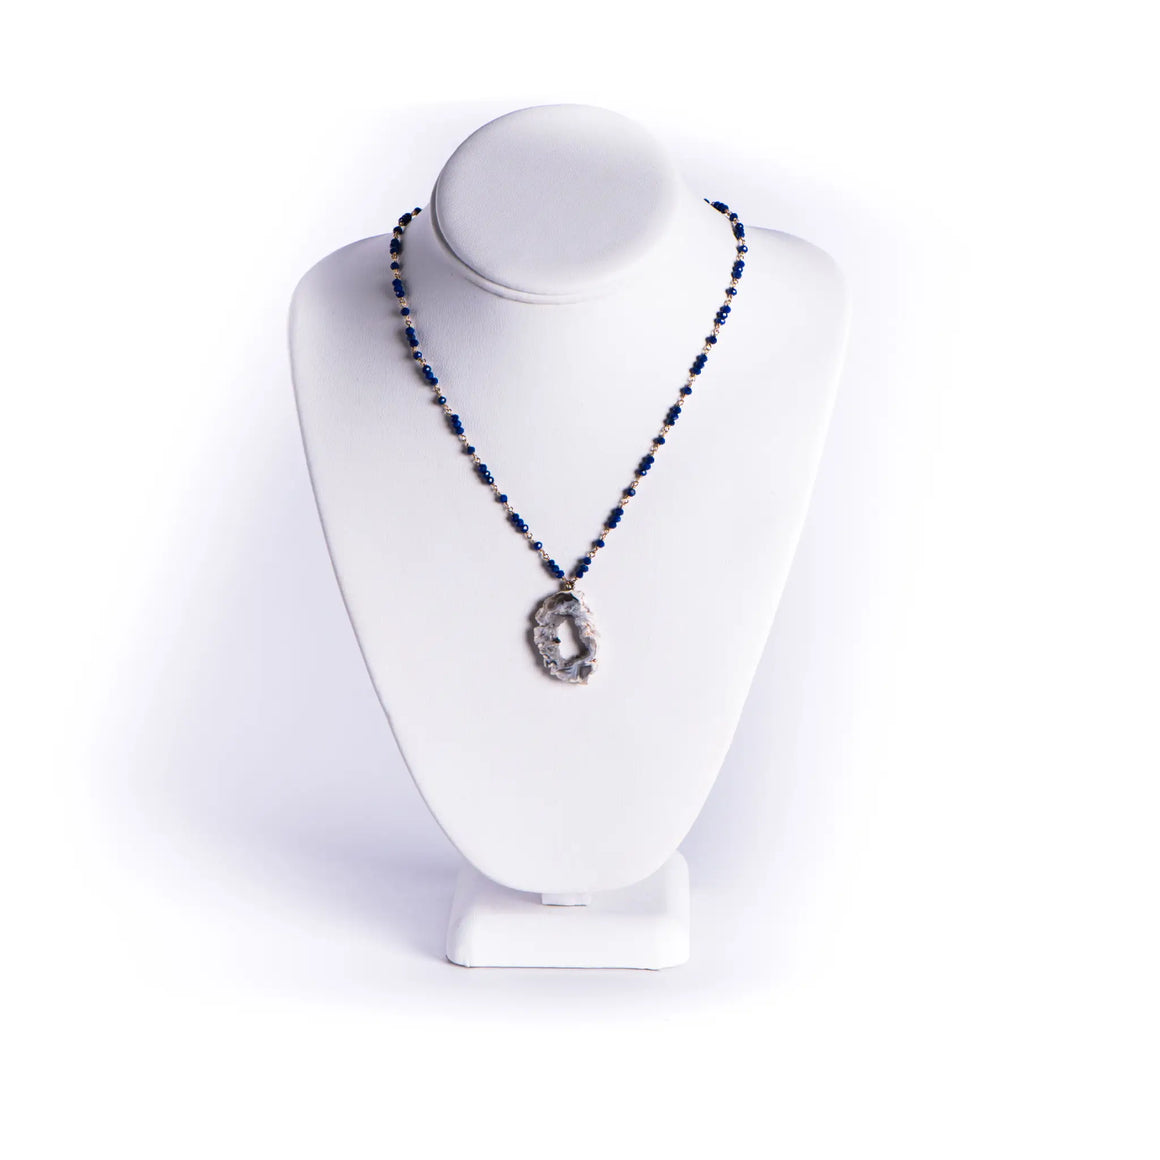 Necklace - Lapis Lazuli with Geode Slice Pendant